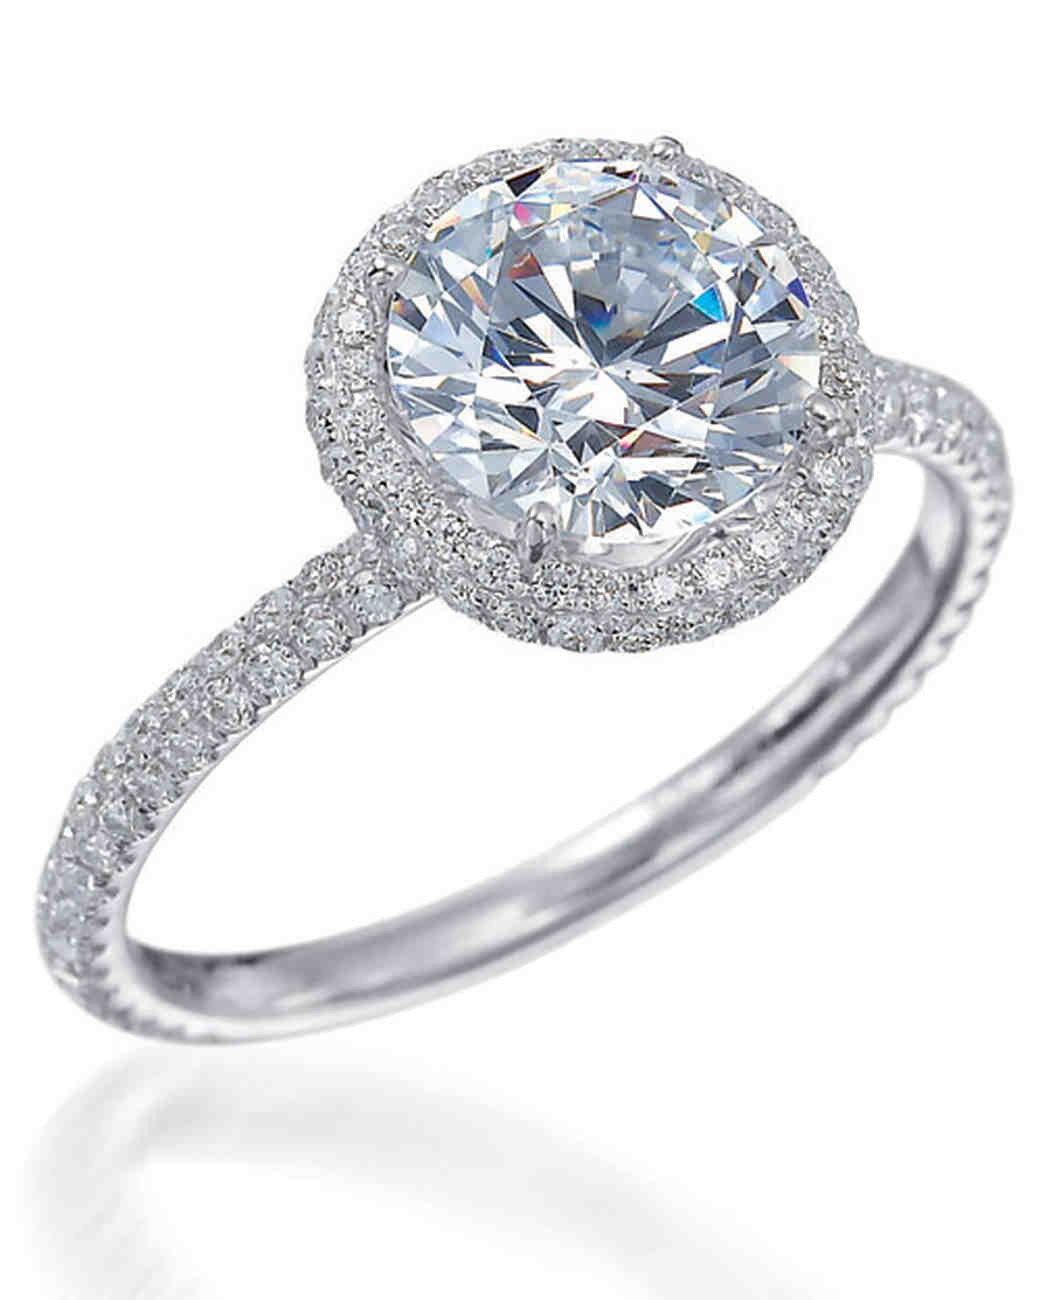 Round Solitaire Diamond Engagement Rings
 Round Cut Diamond Engagement Rings